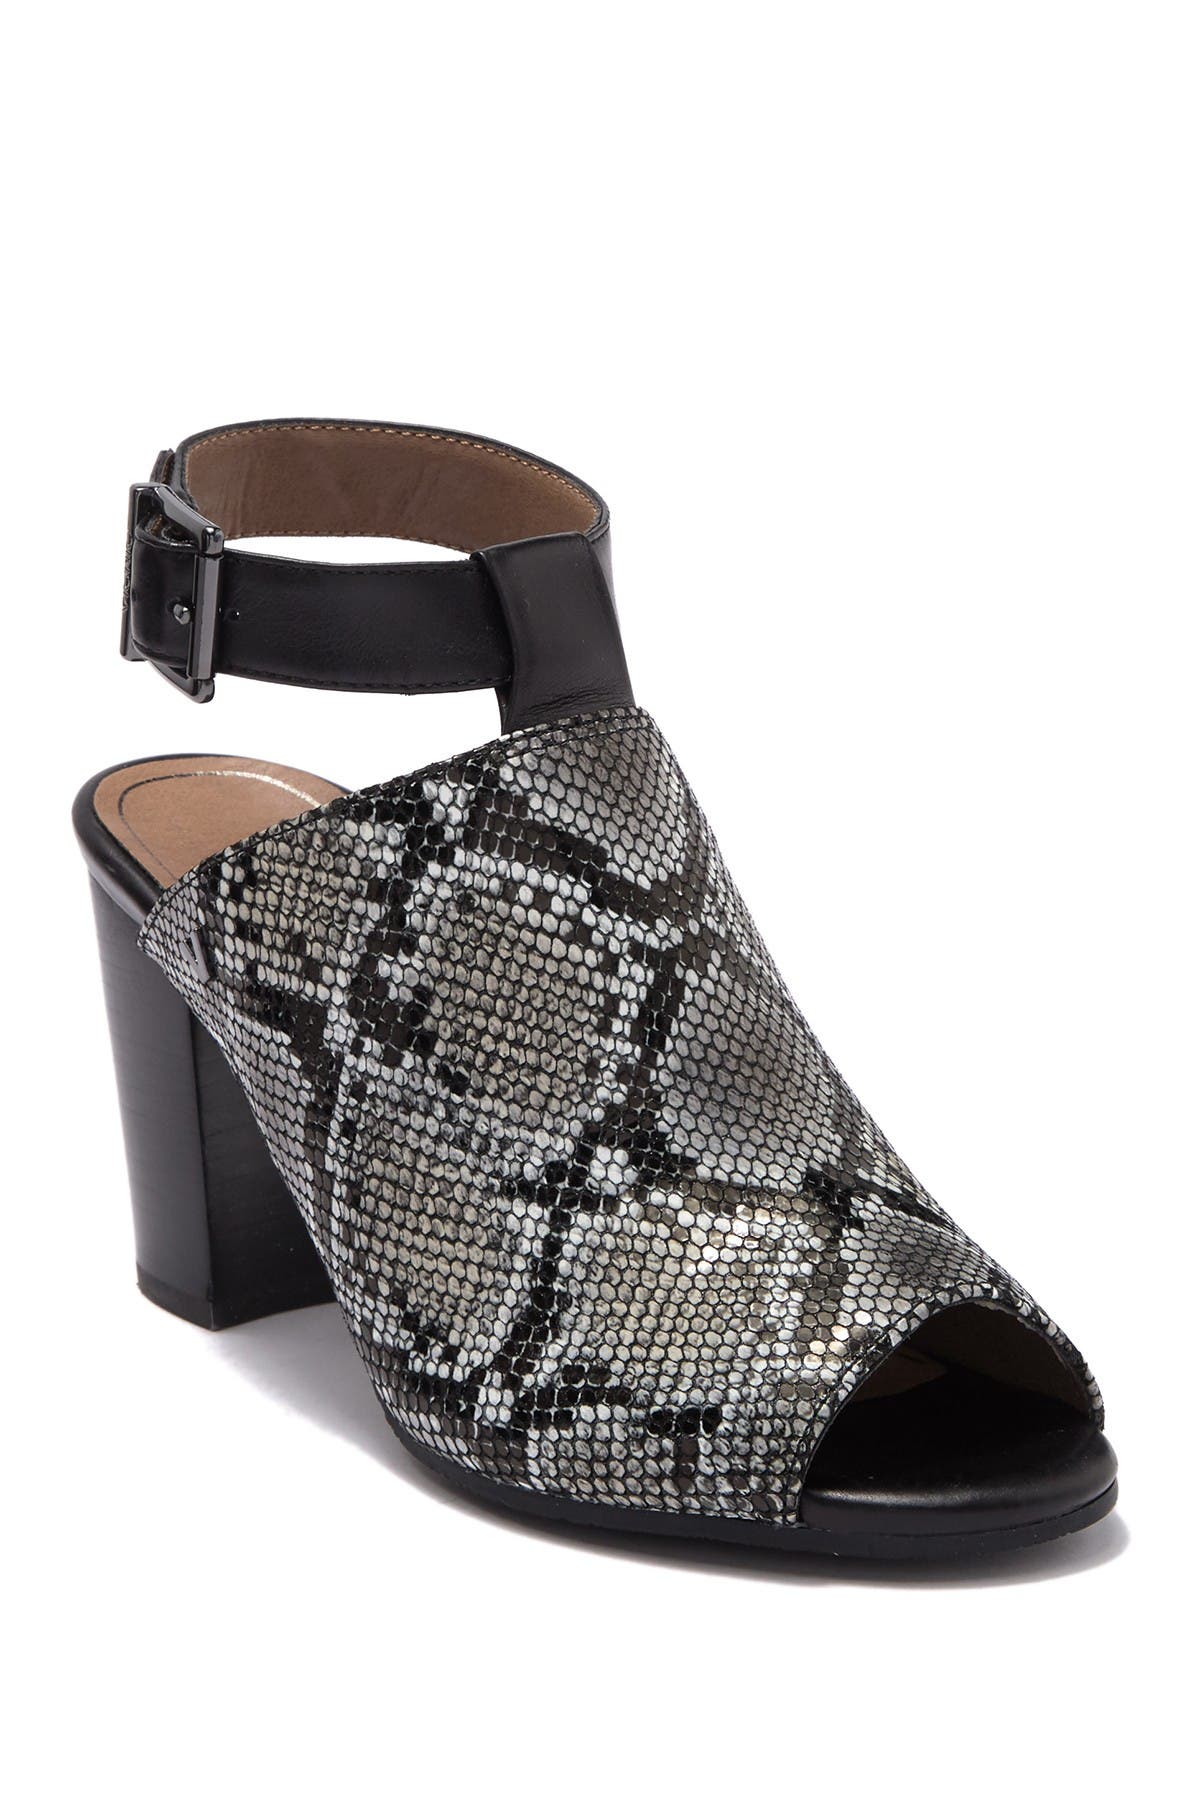 vionic kaia stacked heel